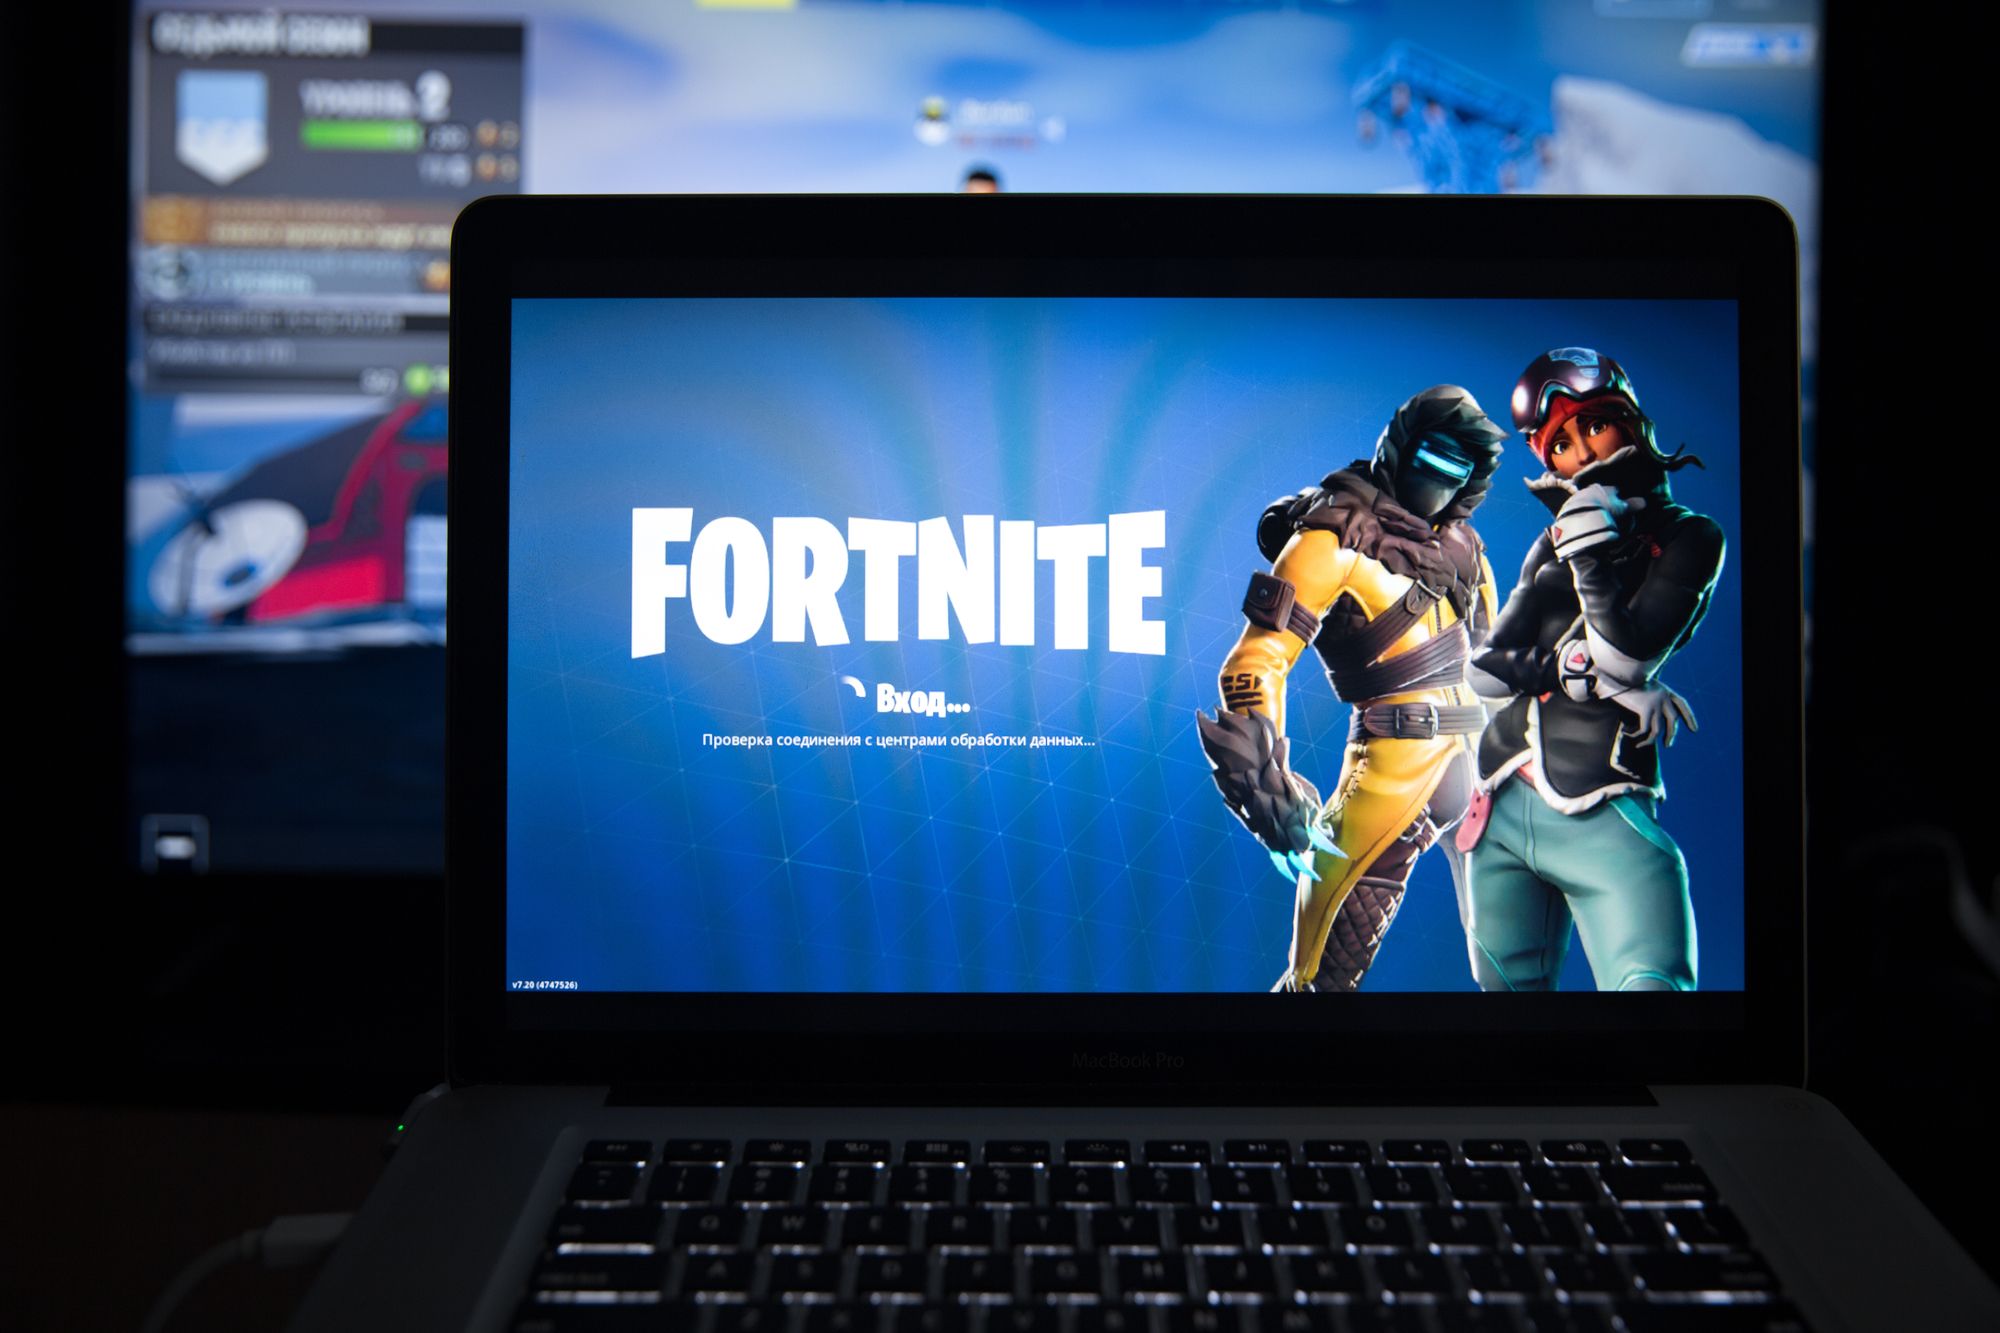 Fortnite is seen on a laptop - epic games class action lawsuit rocket league